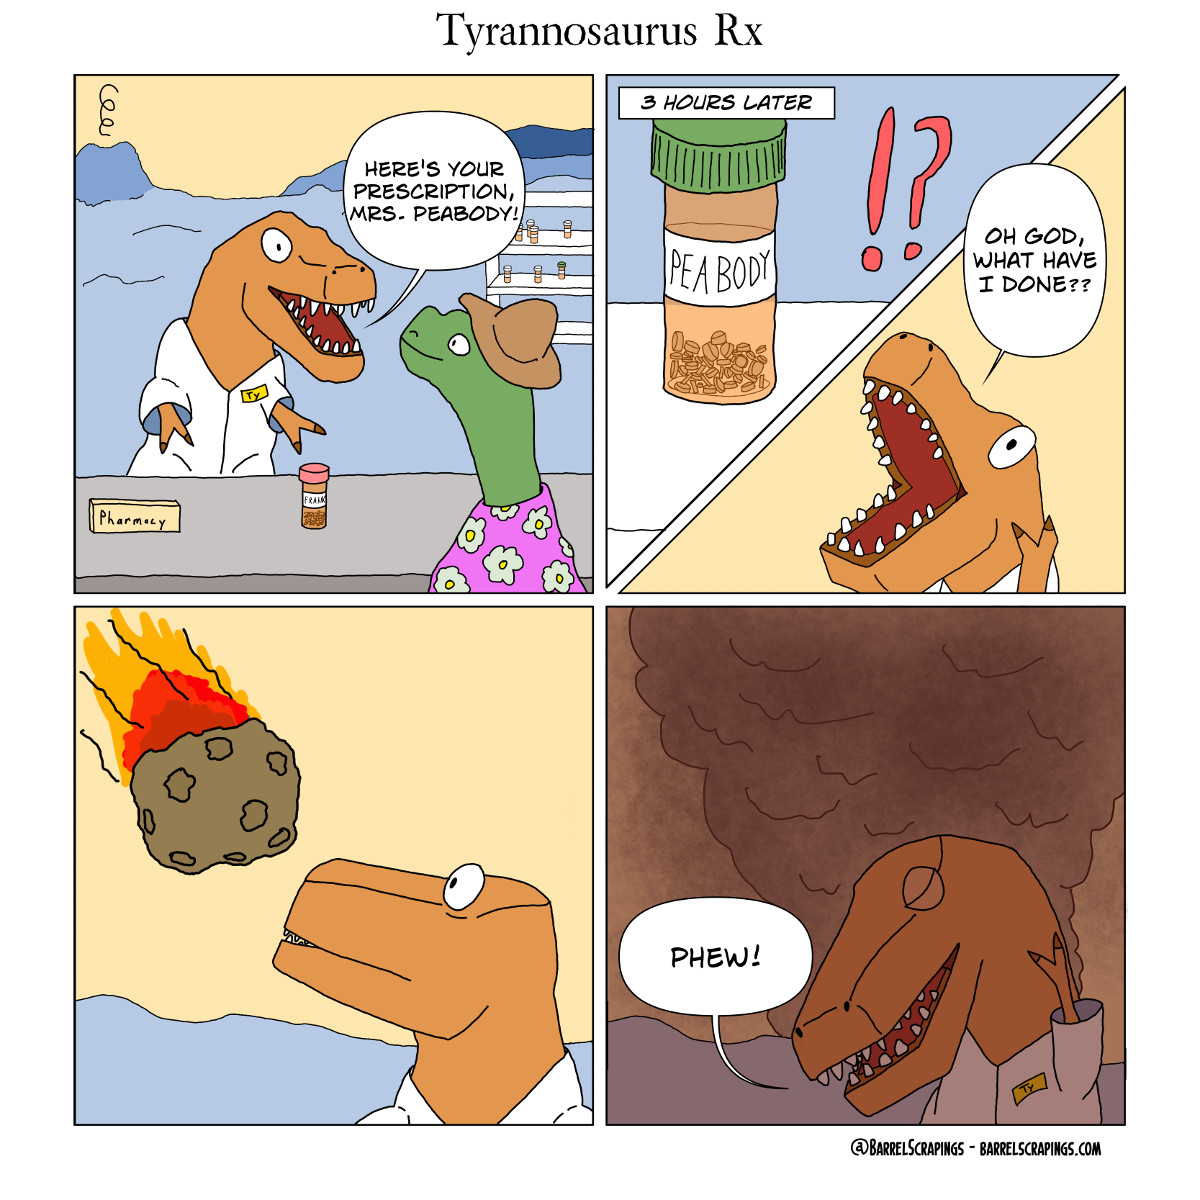 image from Tyrannosaurus Rx